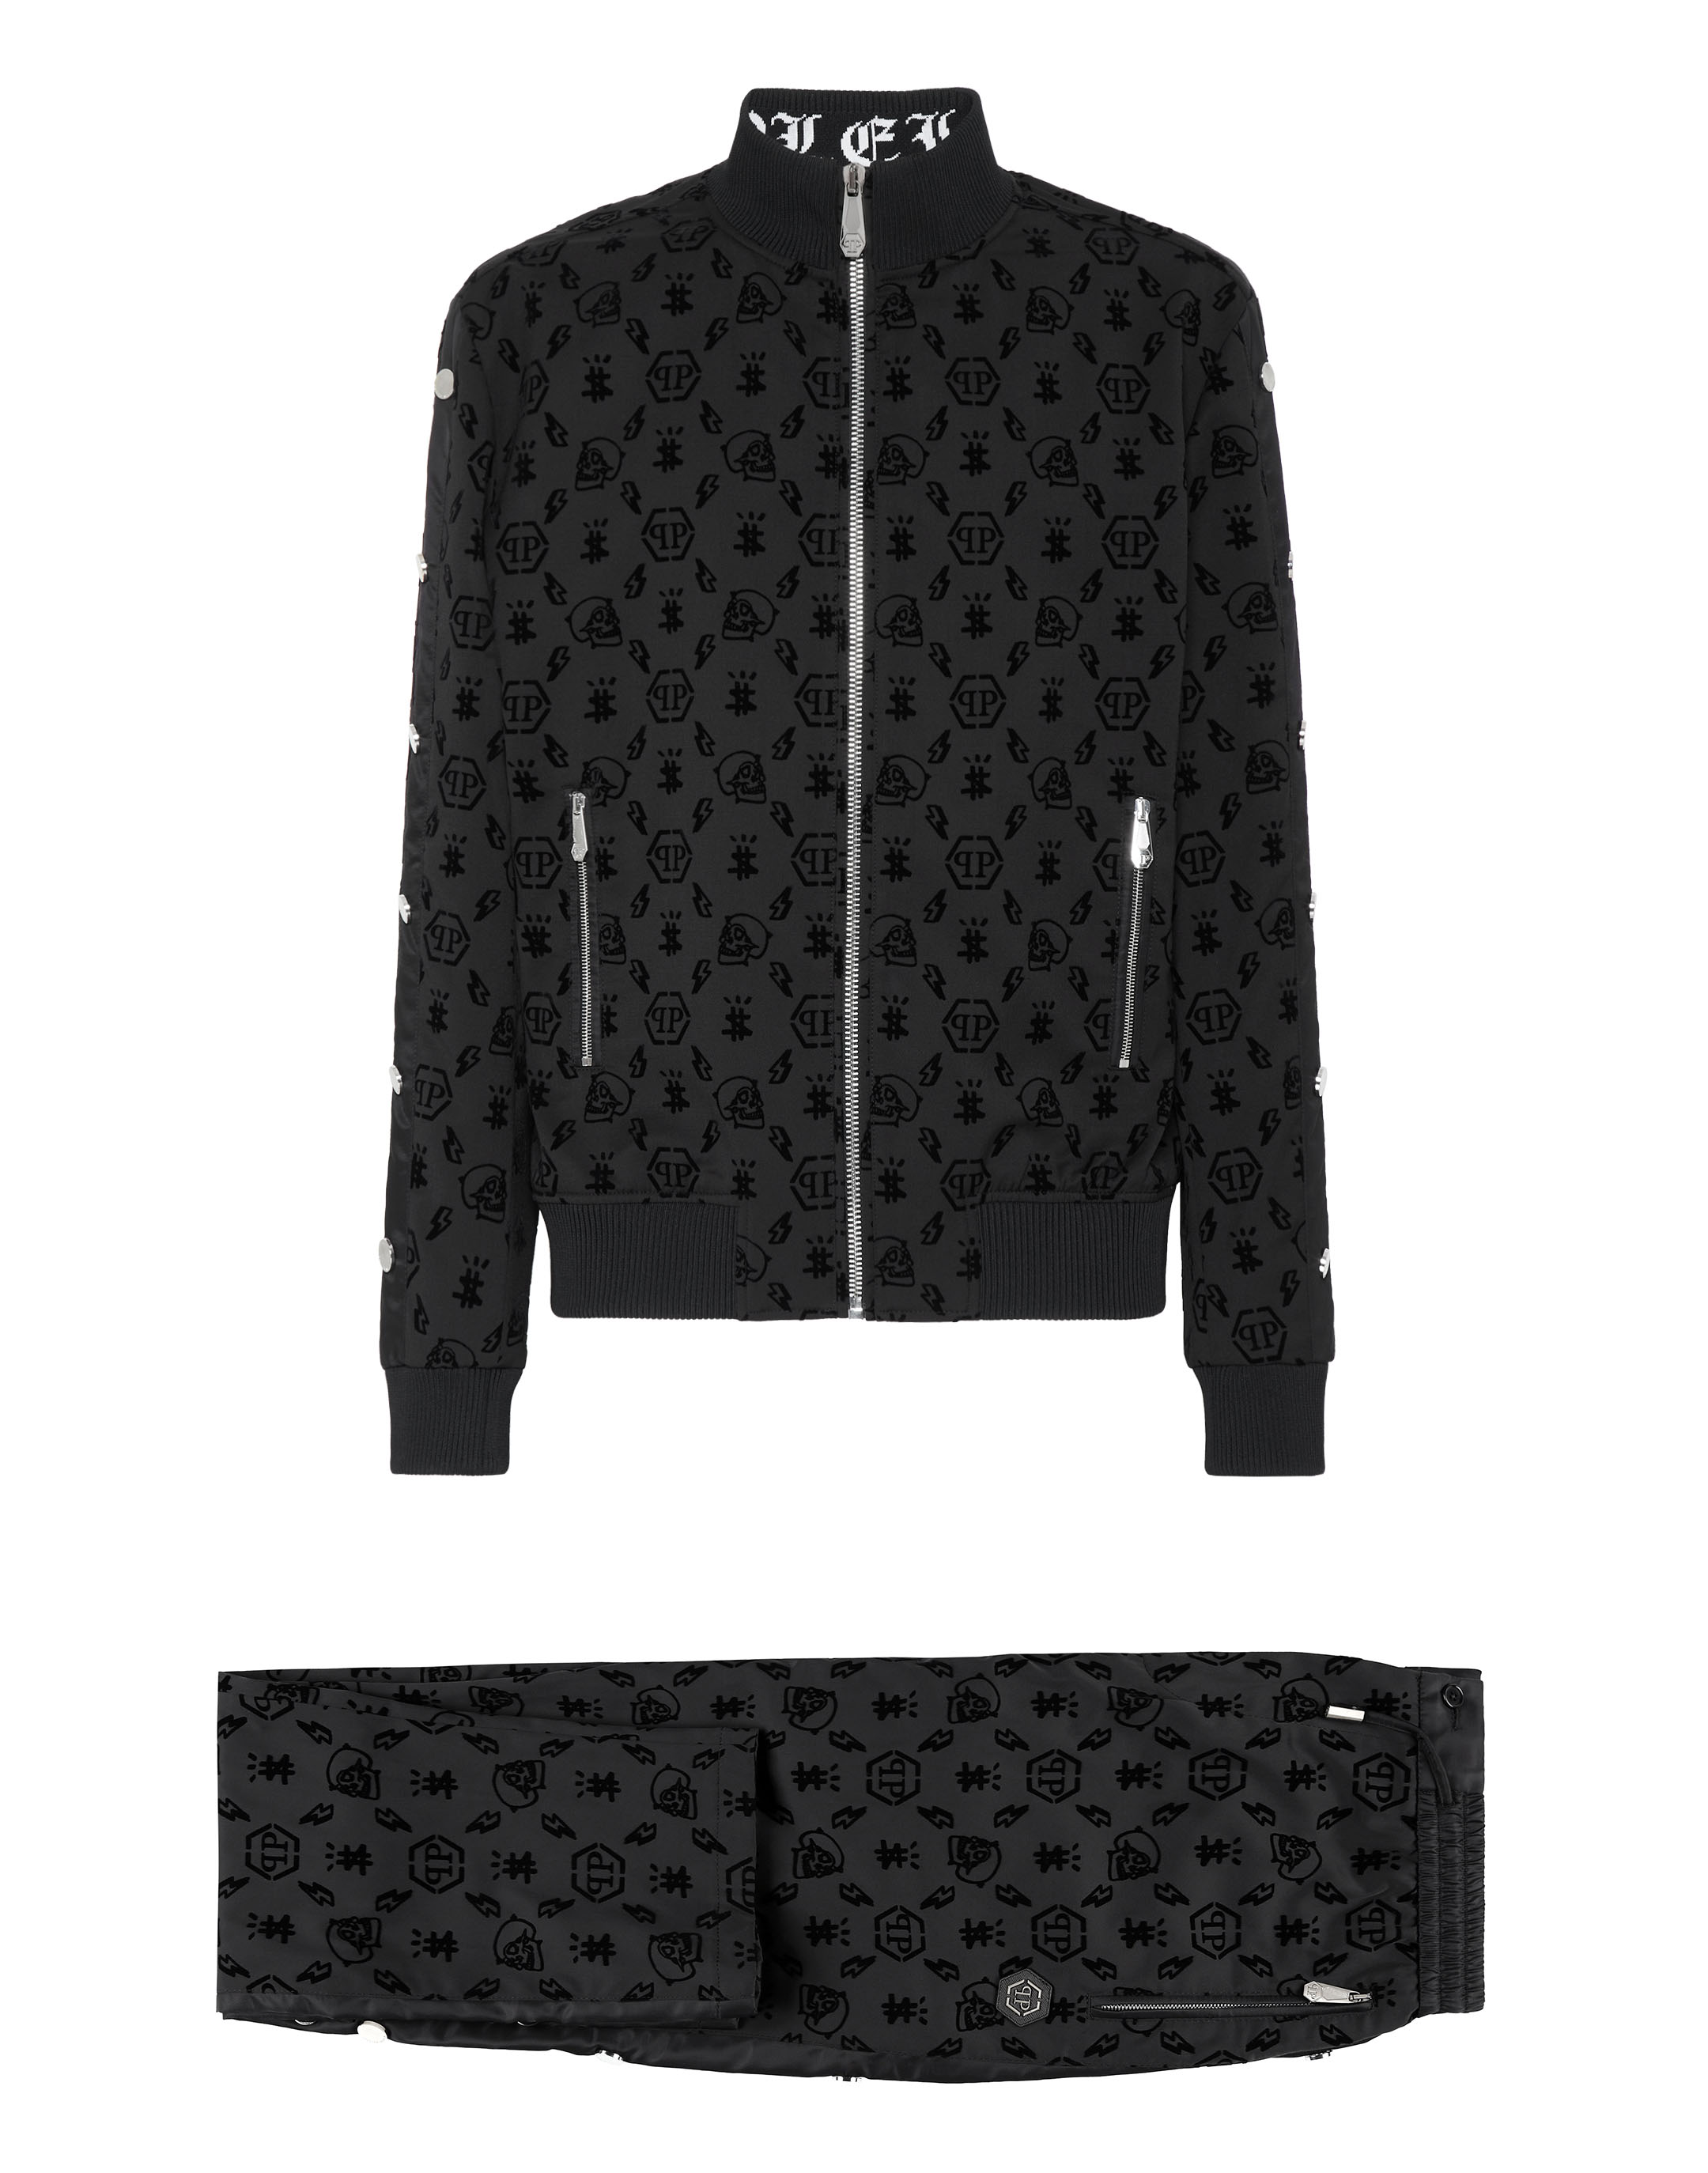 Monogram DNA Denim Jacket - Luxury Black